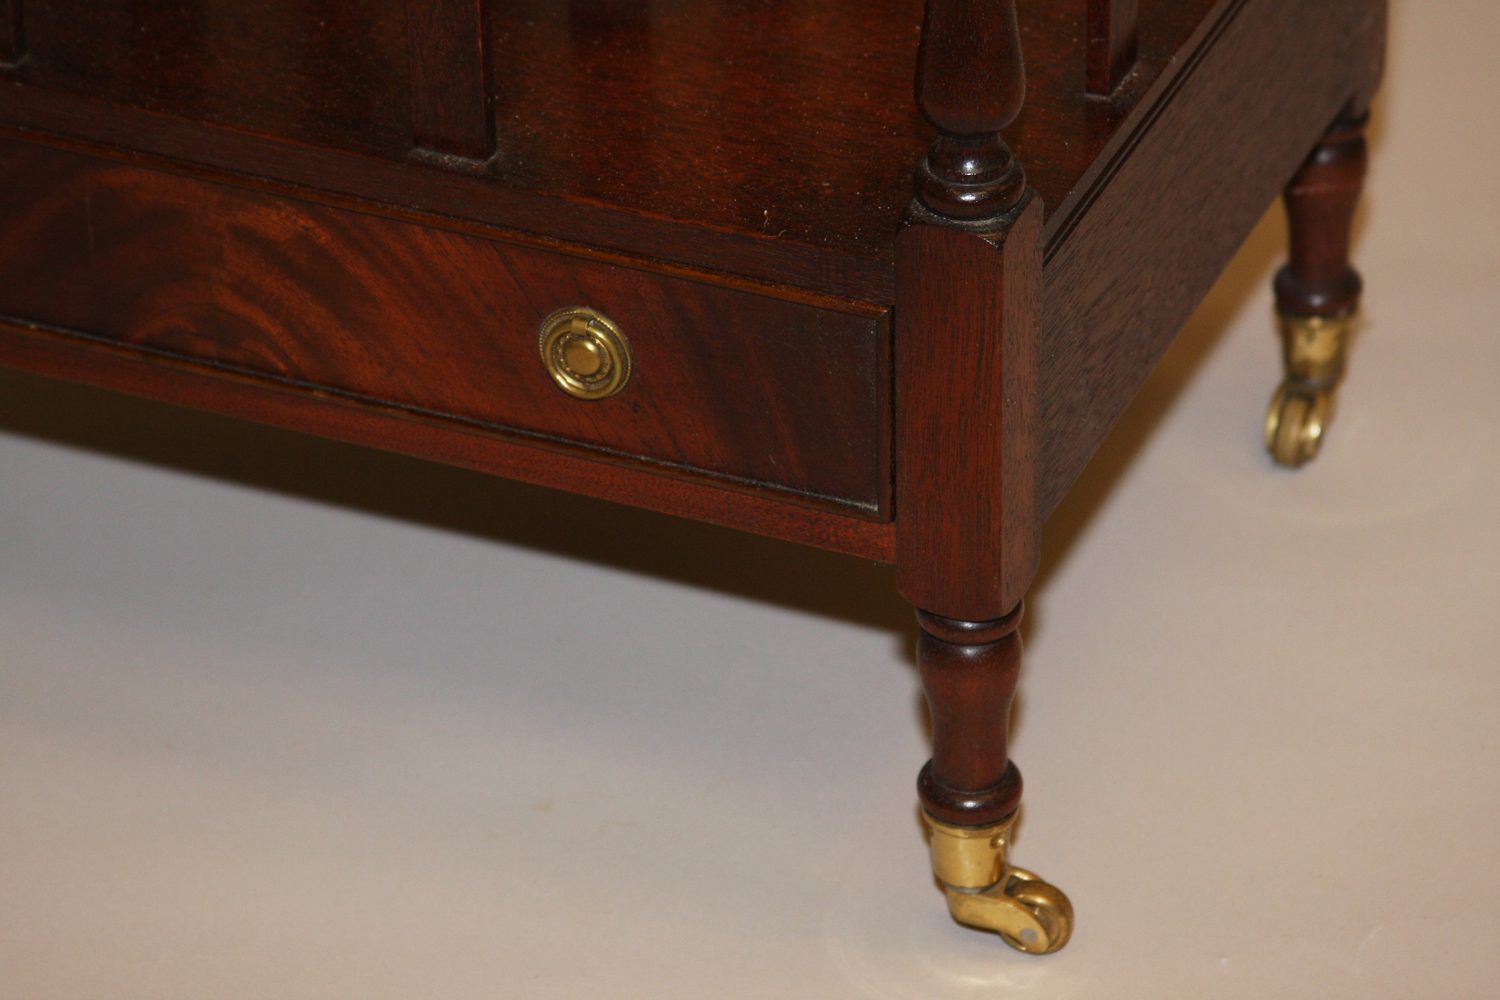 Corner Detail with Brass Castor